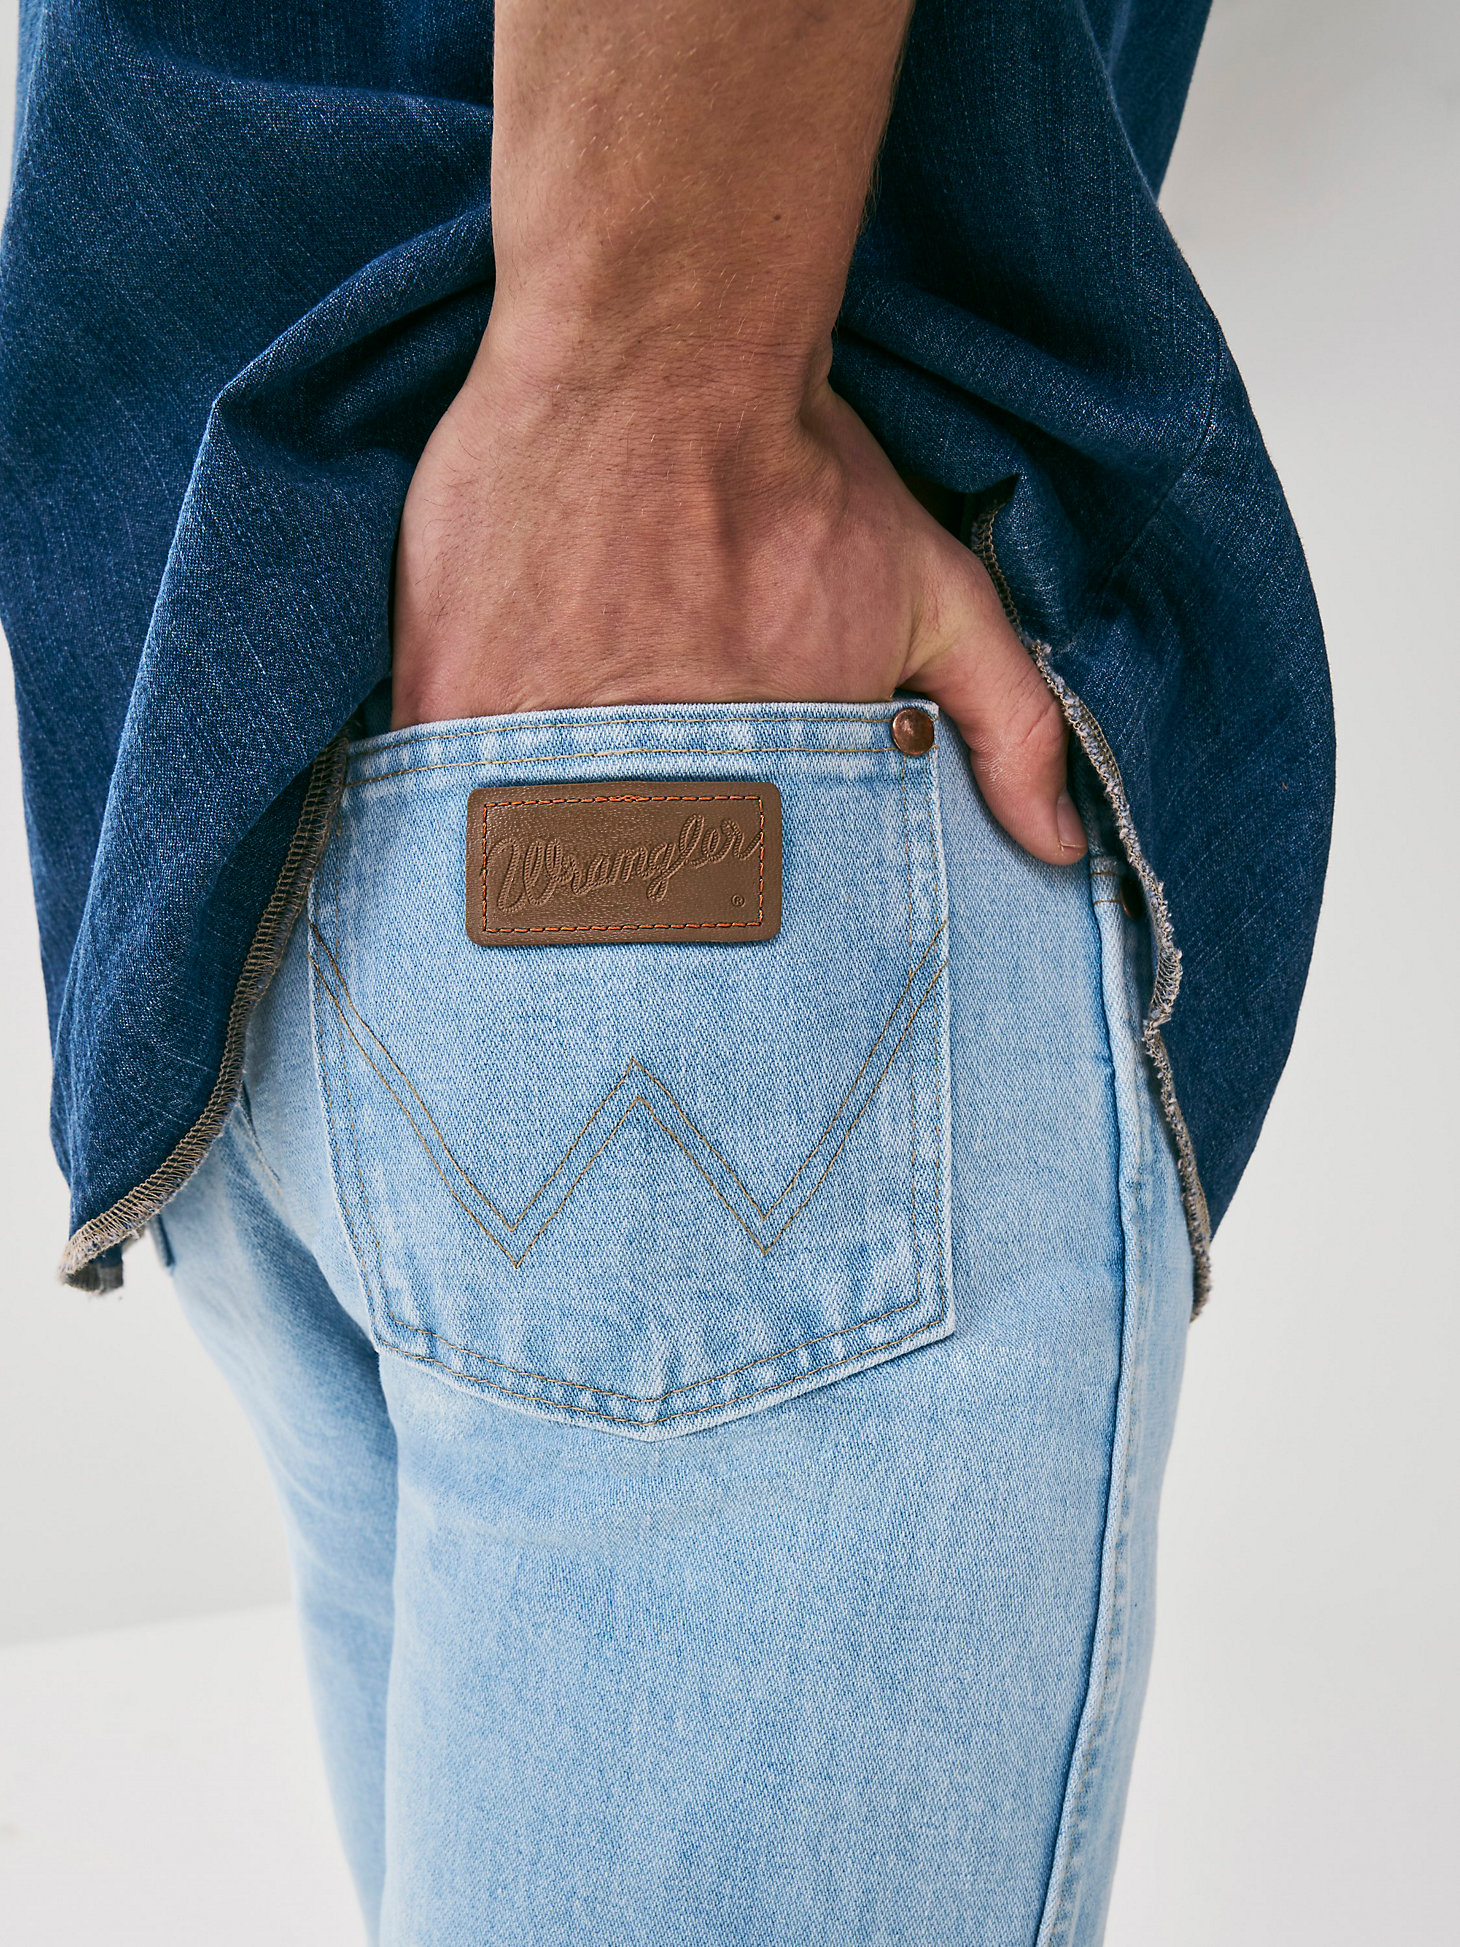 Big & Tall Details about   Rigid Wrangler Cowboy Cut 13MWZ Original Fit Jeans Men's